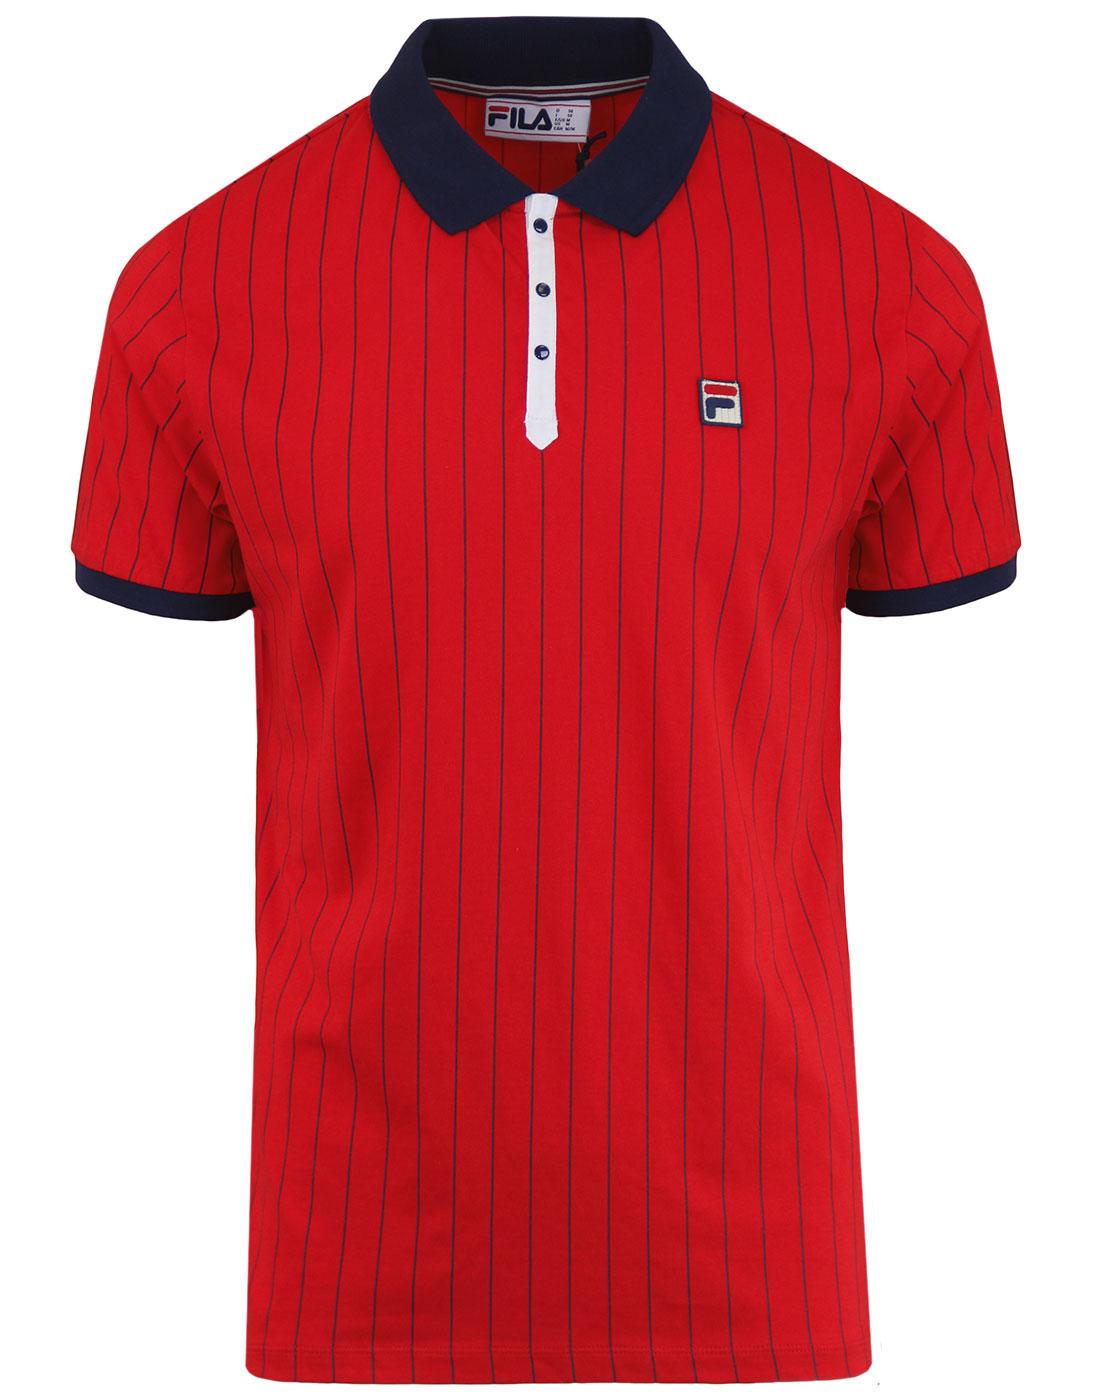 FILA VINTAGE BB1 Retro 1970s Borg Tennis Polo Shirt in Red